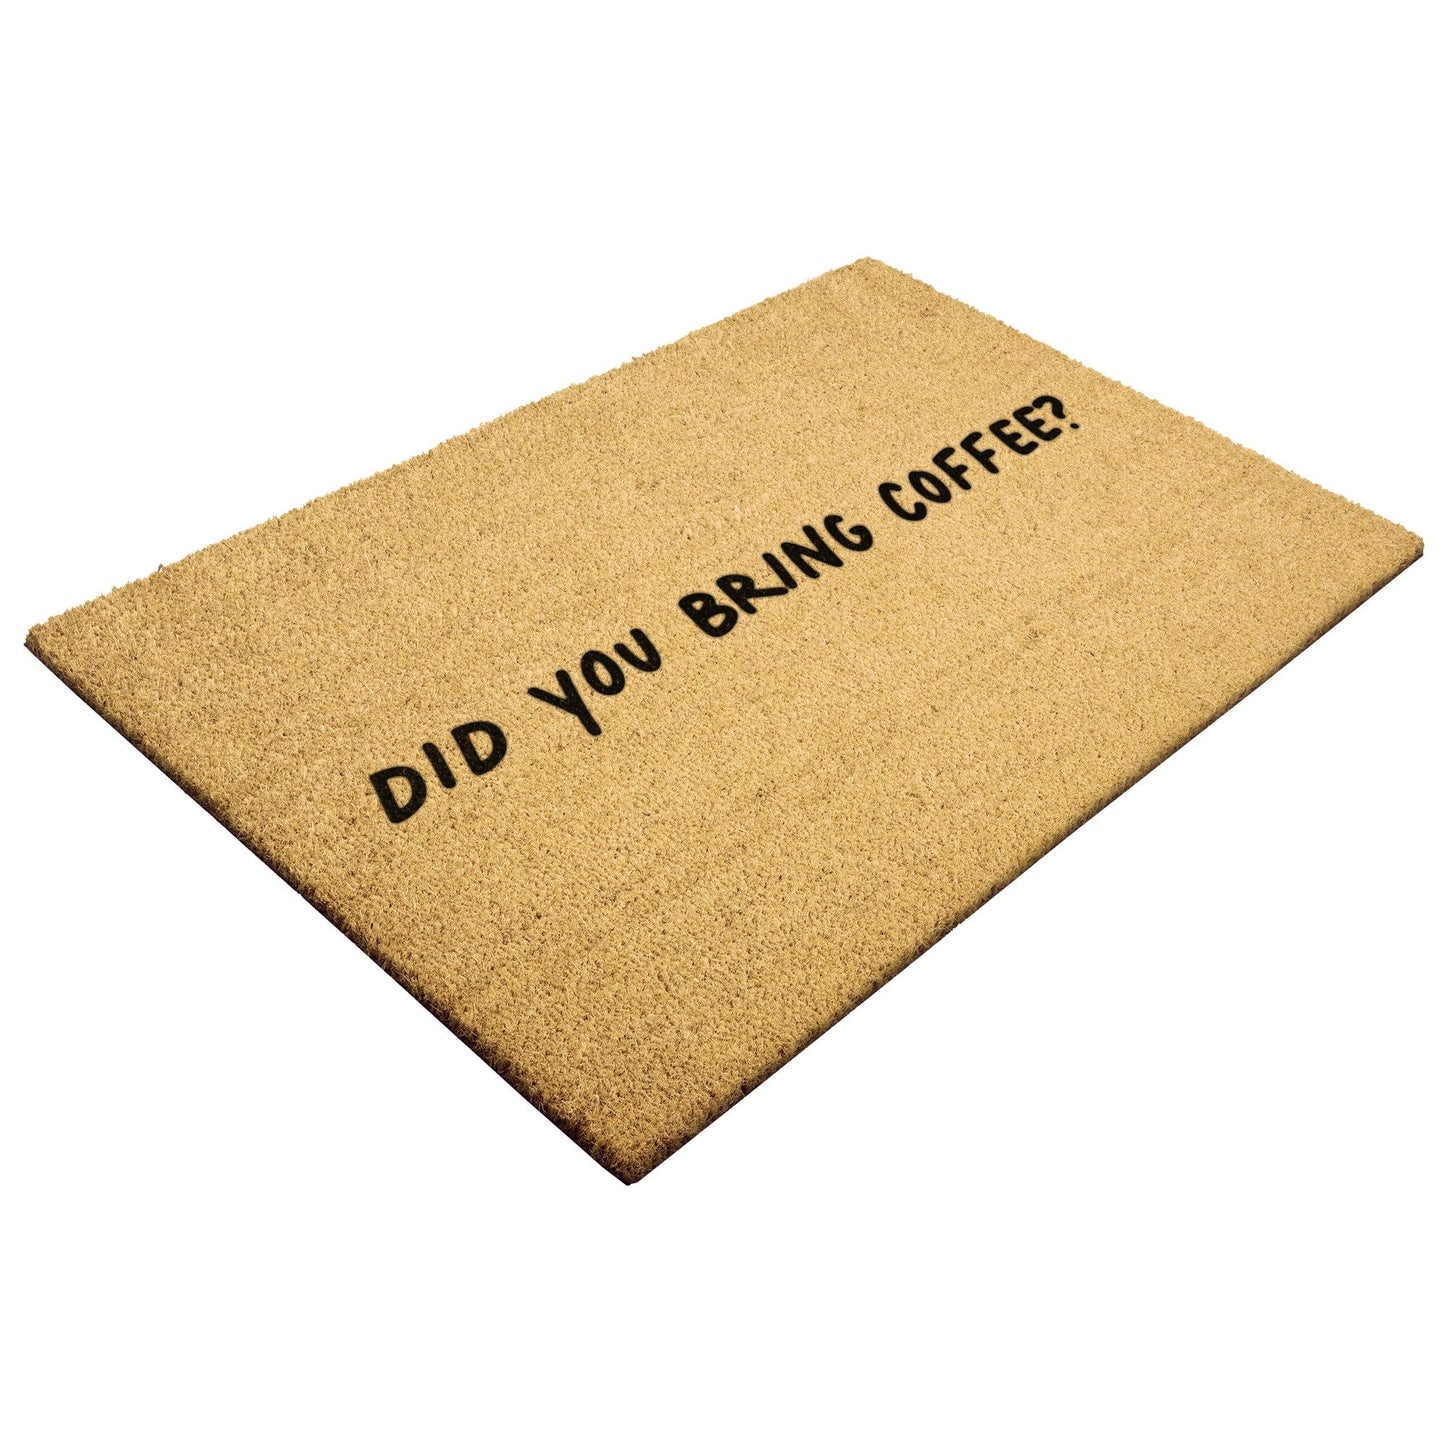 Good Bean Gifts "Did You Bring Coffee" Doormat